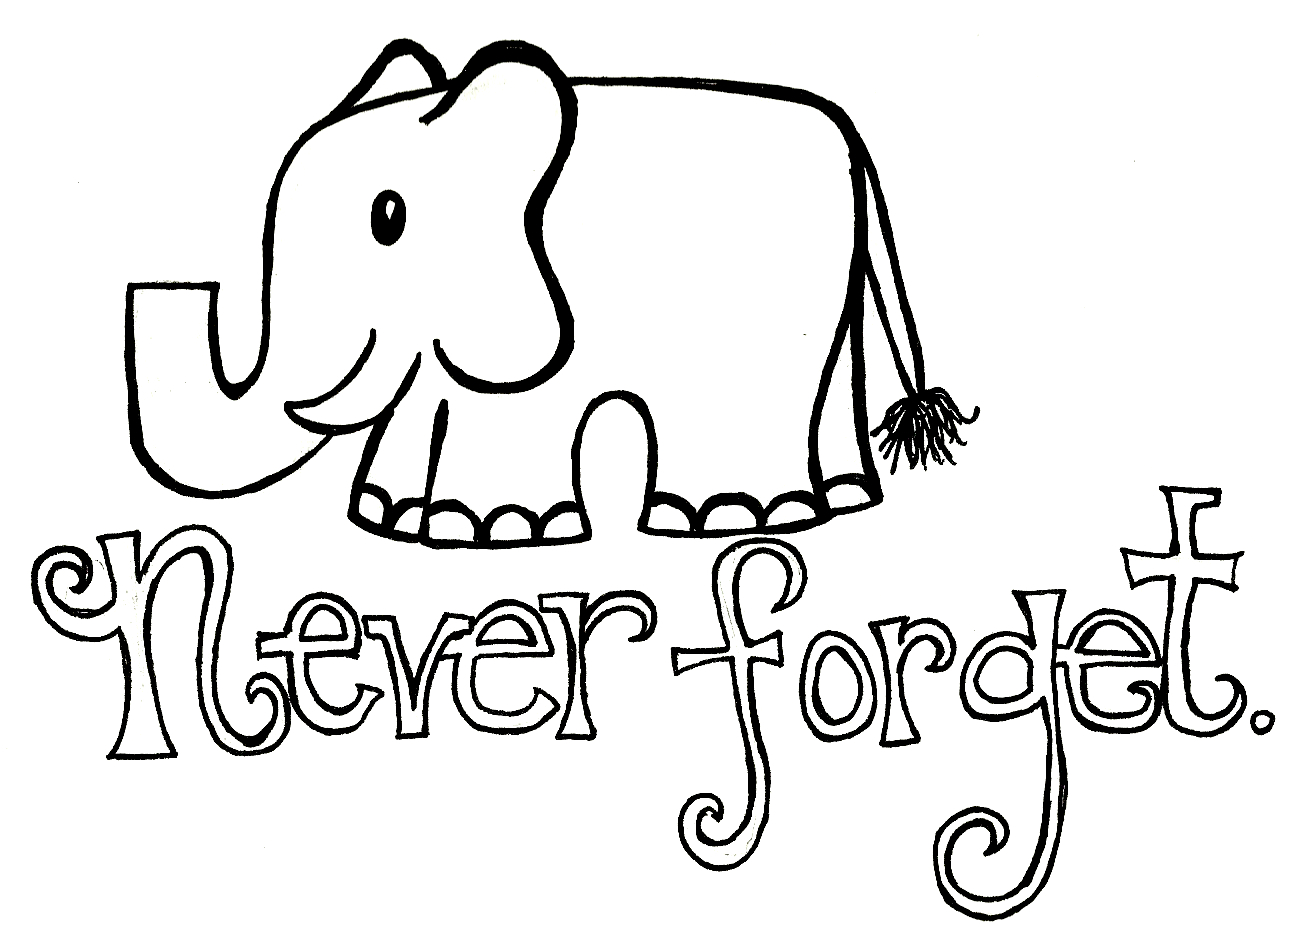 Elephants Never Forget [1939]